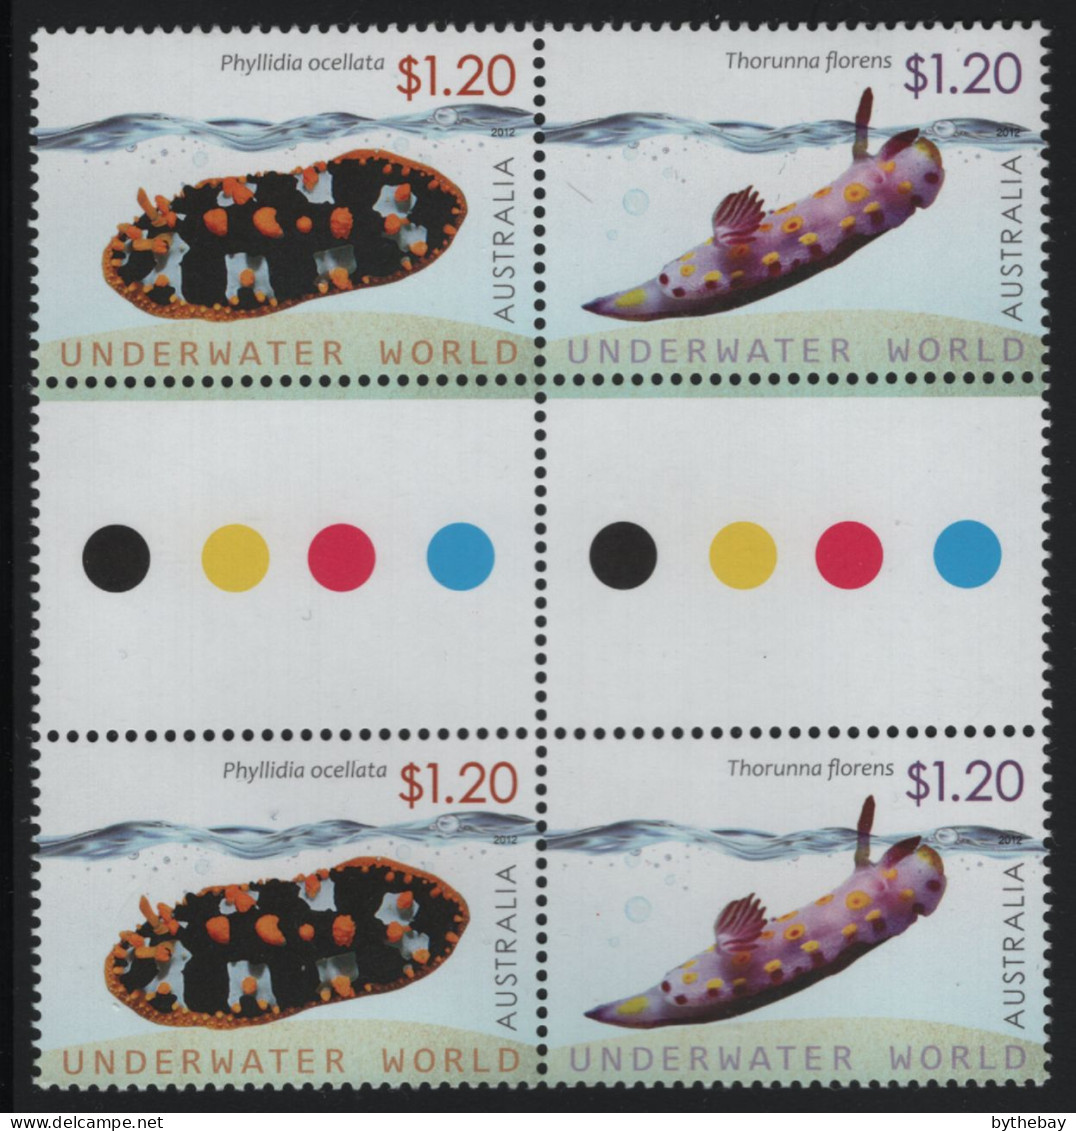 Australia 2012 MNH Sc 3702-3703 $1.20 Nudibranchs Gutter - Mint Stamps